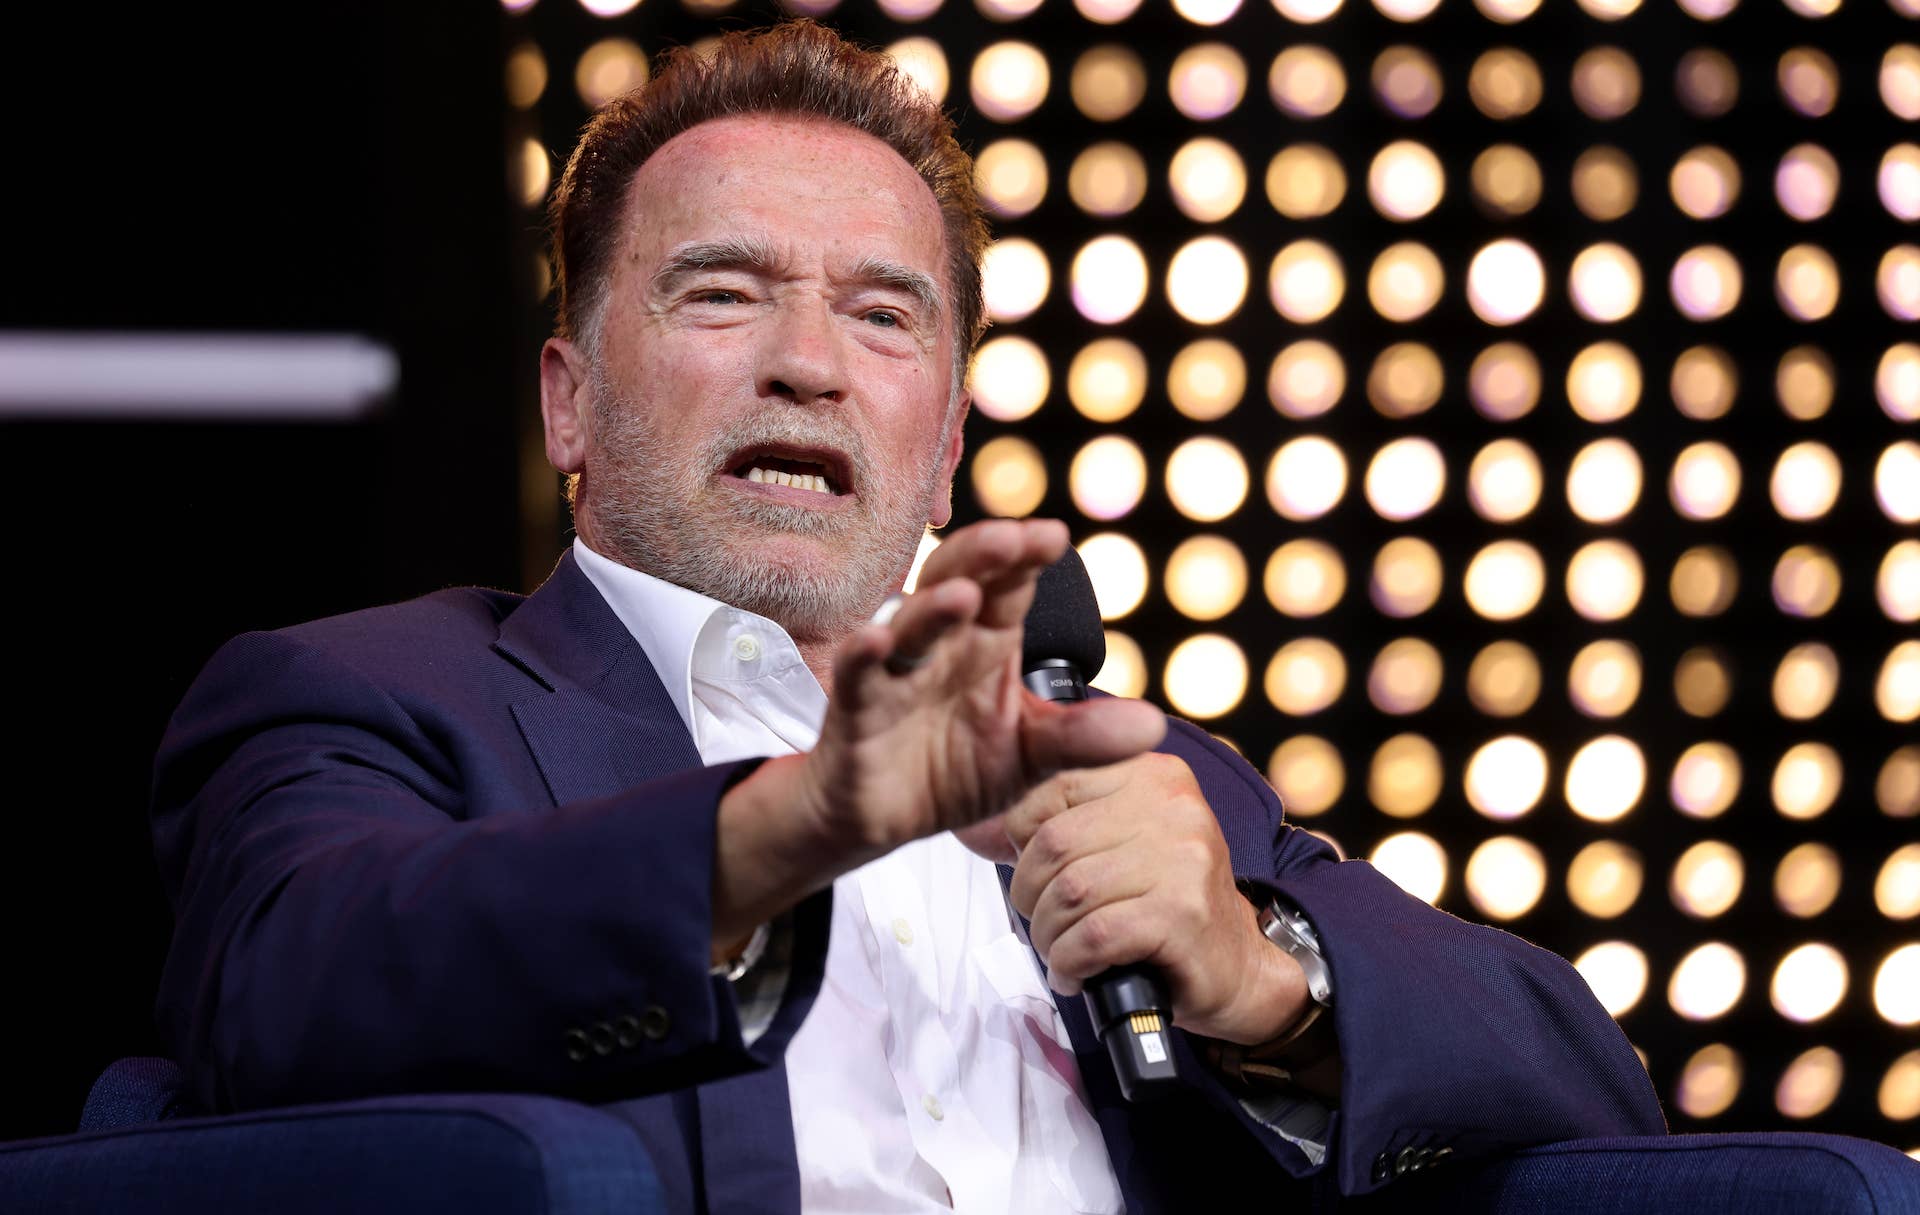 Arnold Schwarzenegger speaks onstage at Digital X event in 2021